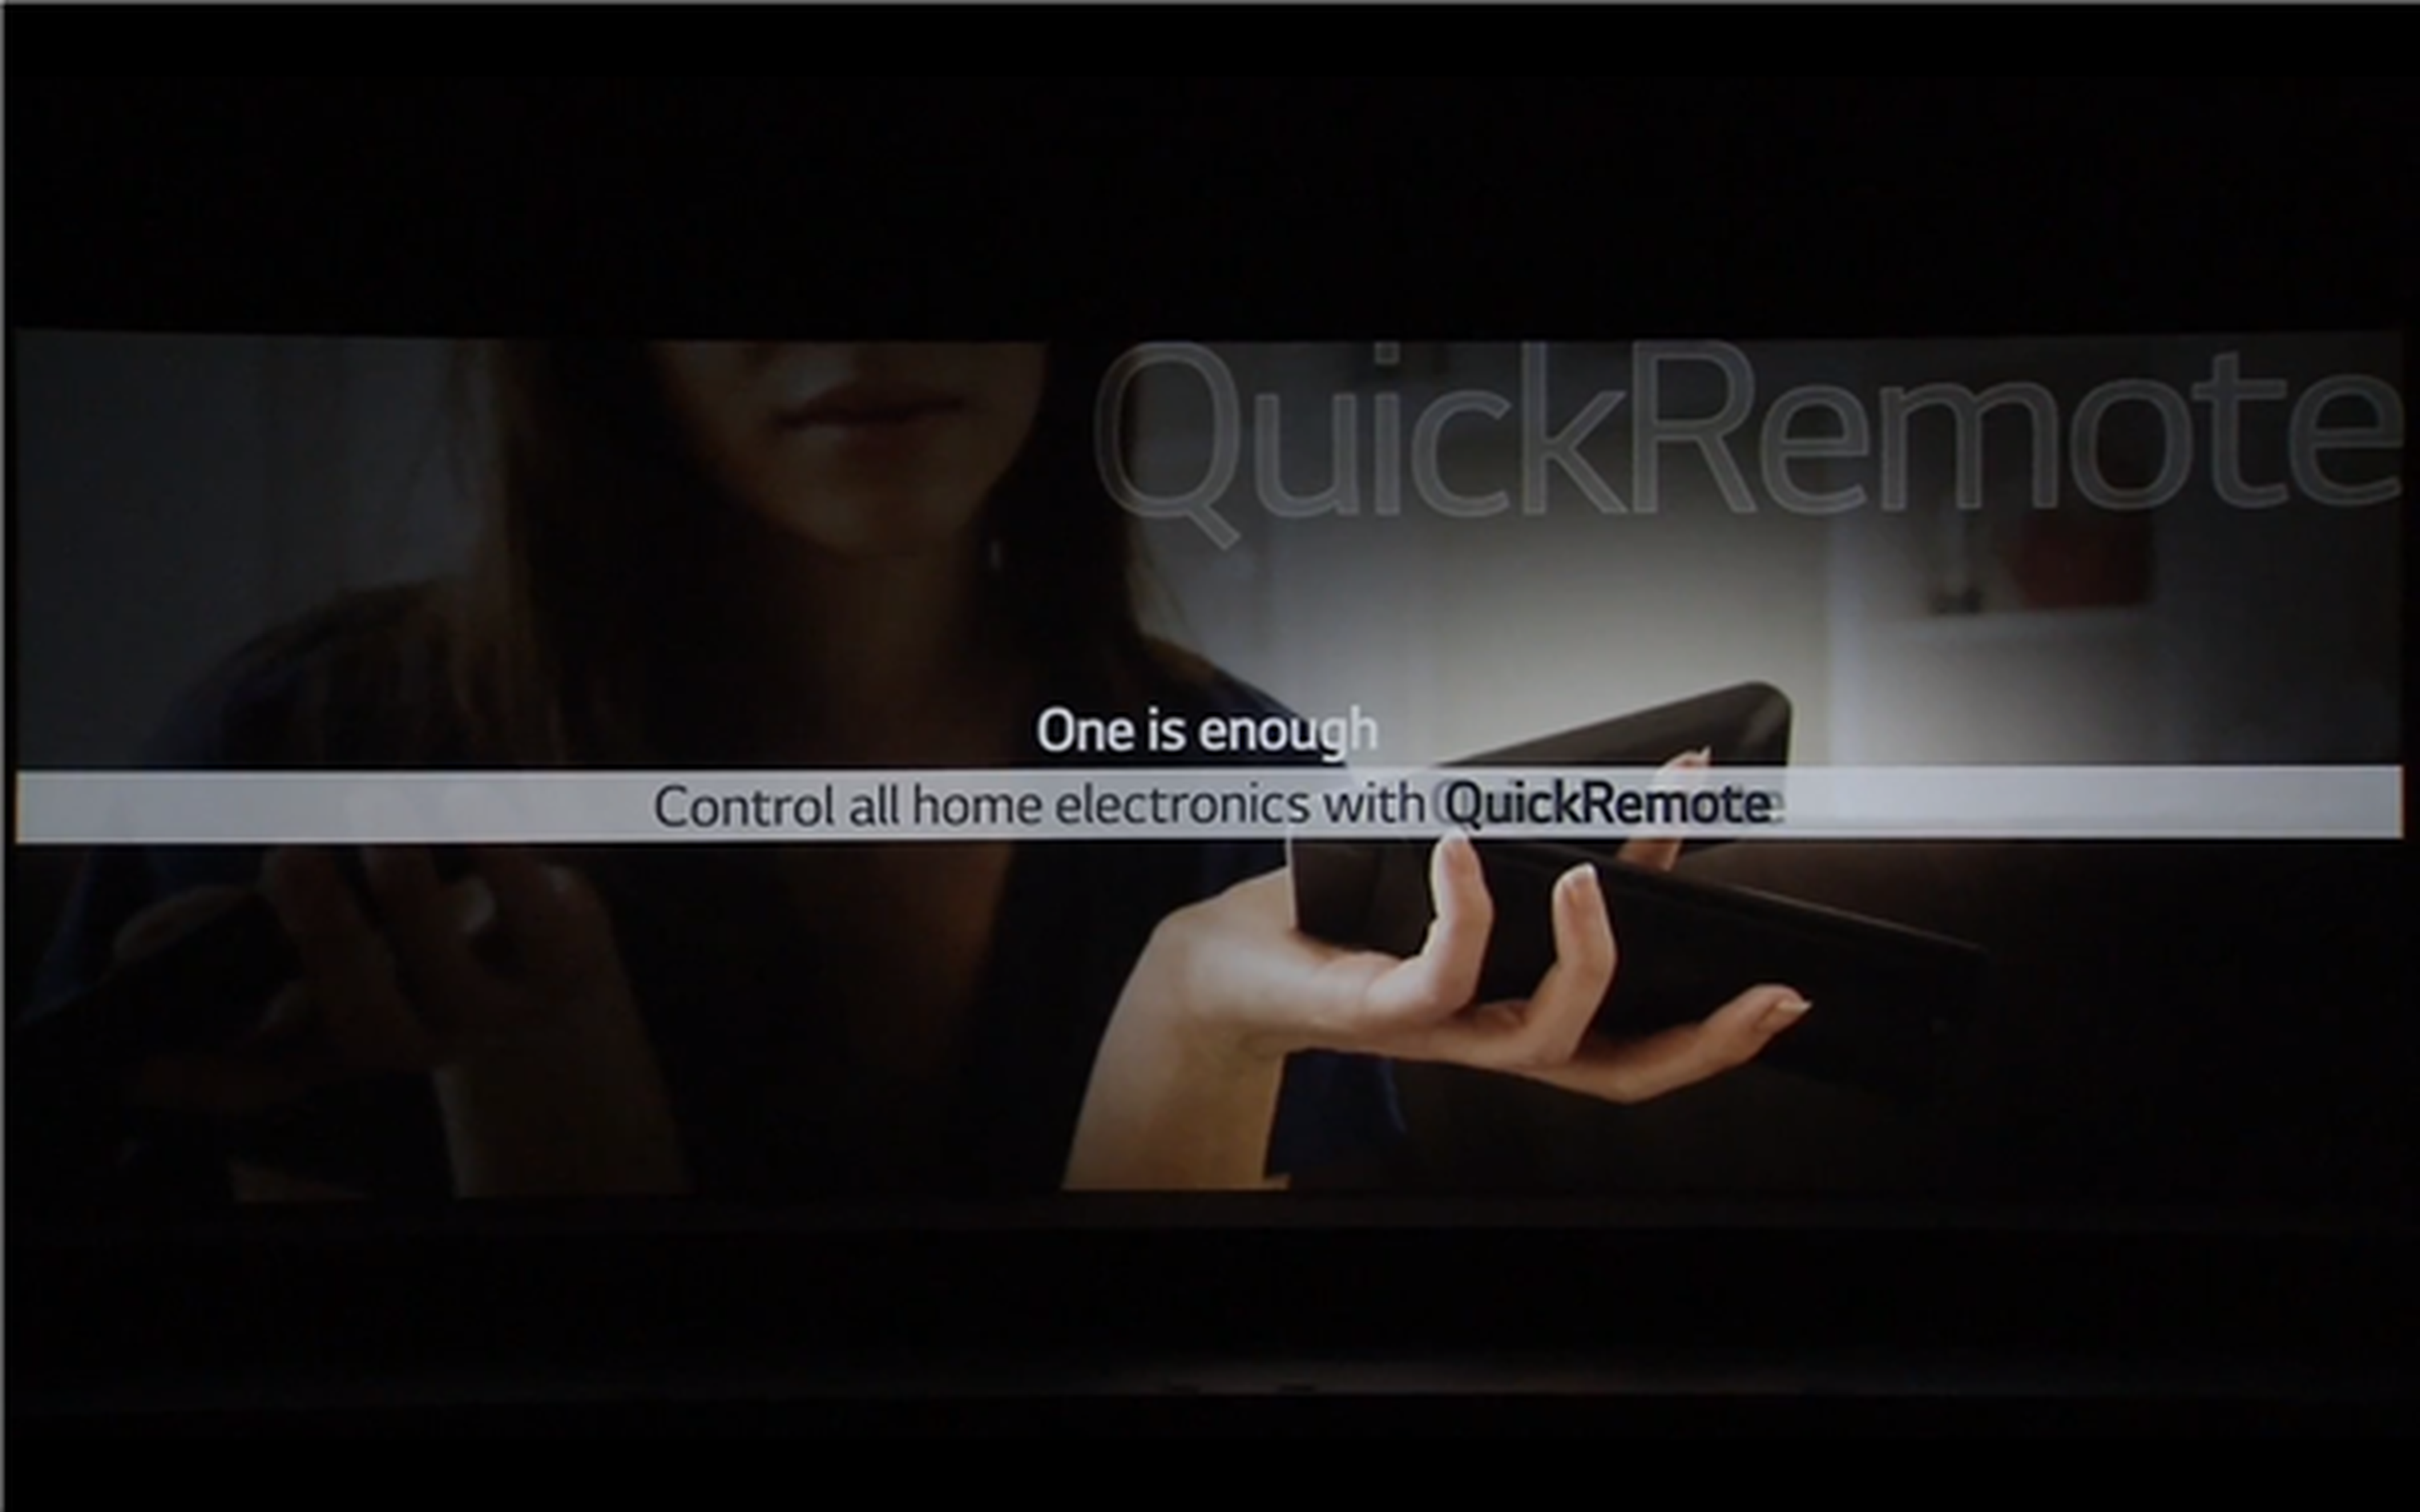 LG G2 presentado oficialmente: pantalla 5.2'' Full HD IPS